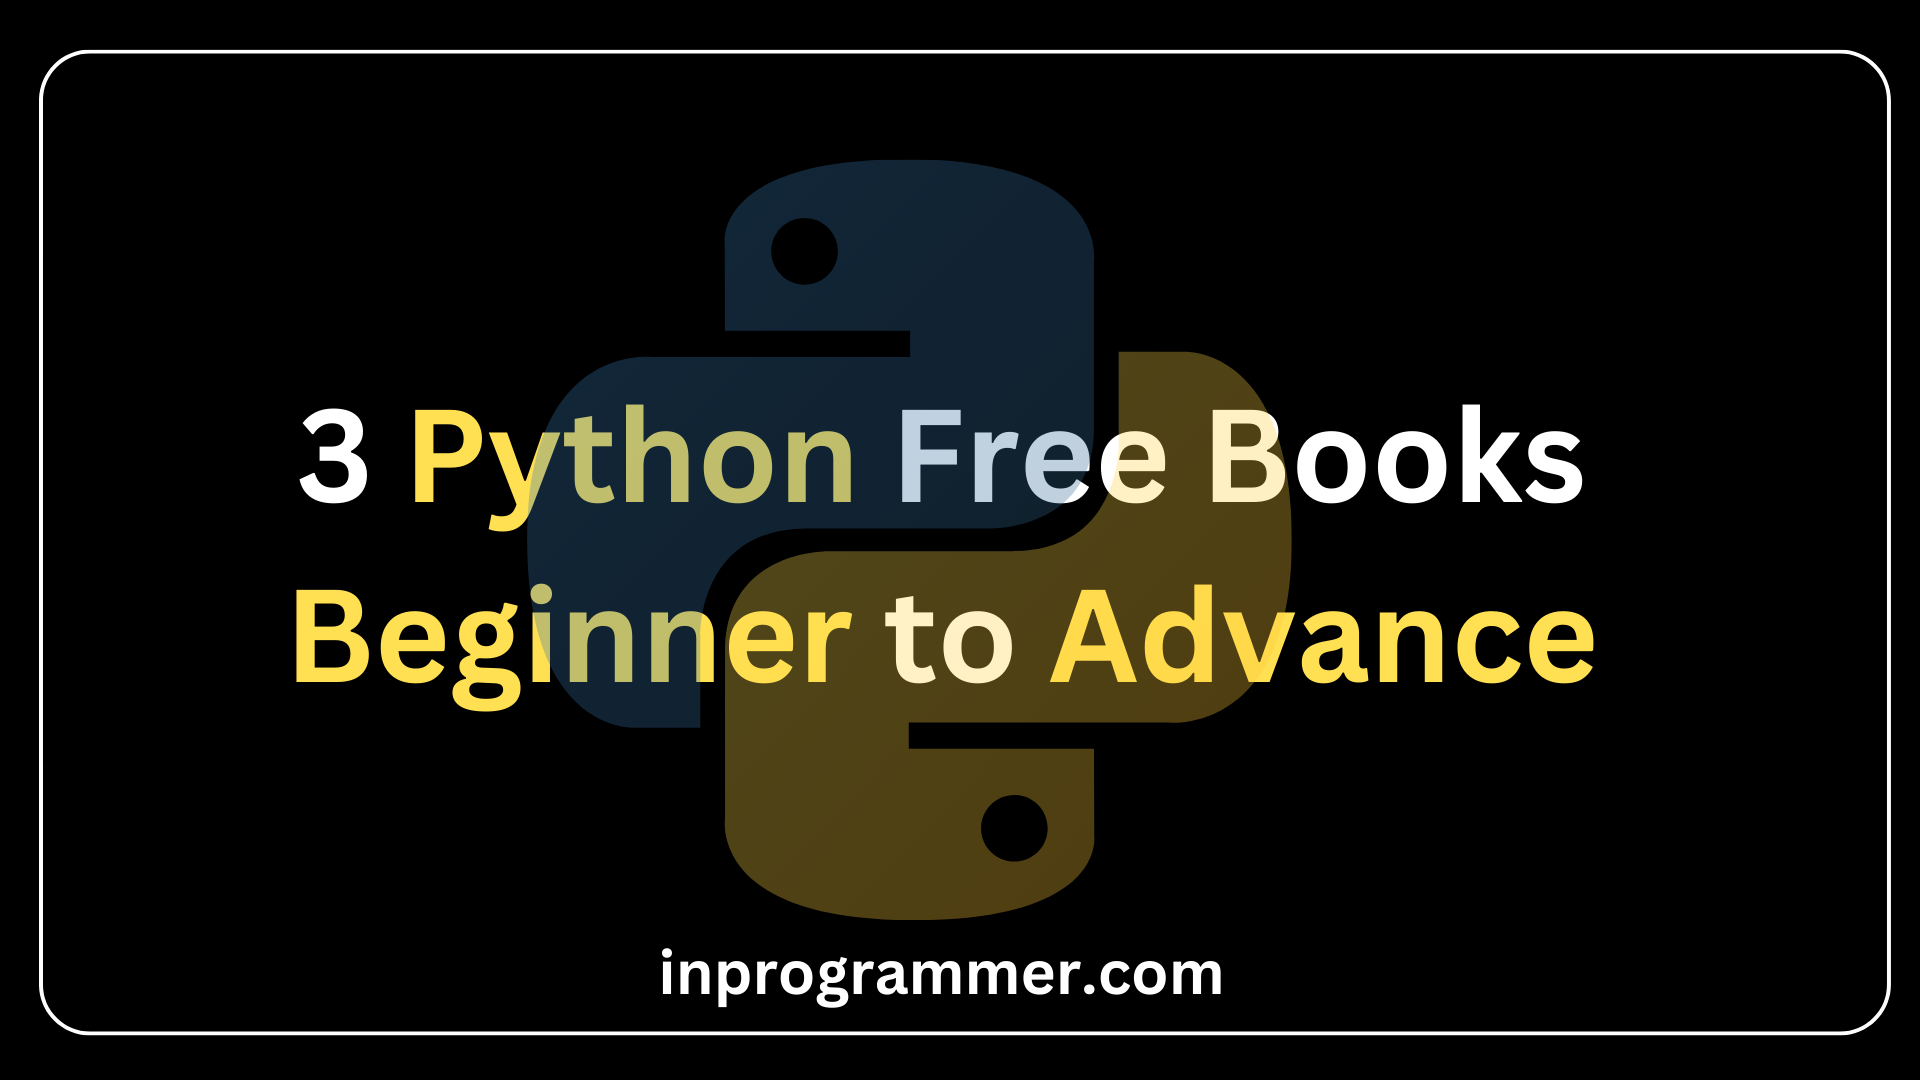 3 Python Free Books Beginner to Advance